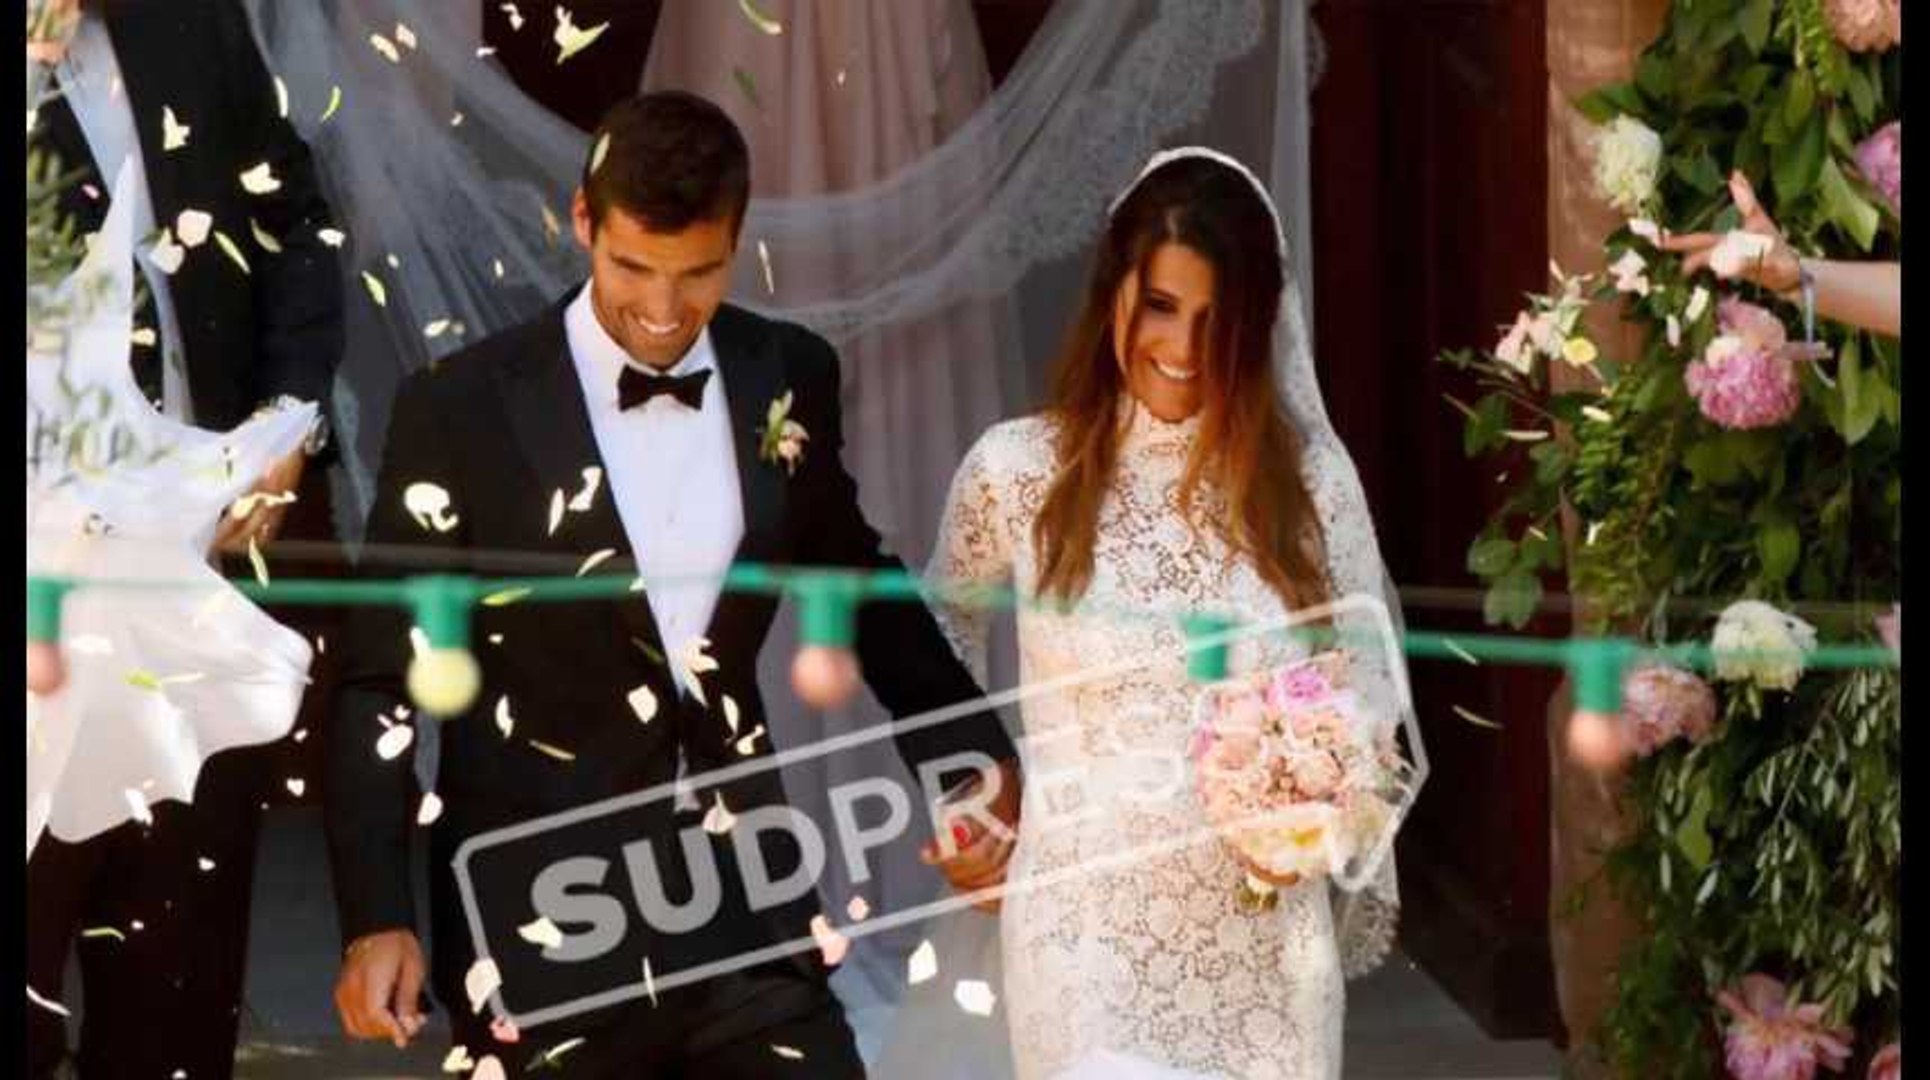 Mariage de Karine Ferri et Yoann Gourcuff : les photos exclusives - Vidéo  Dailymotion